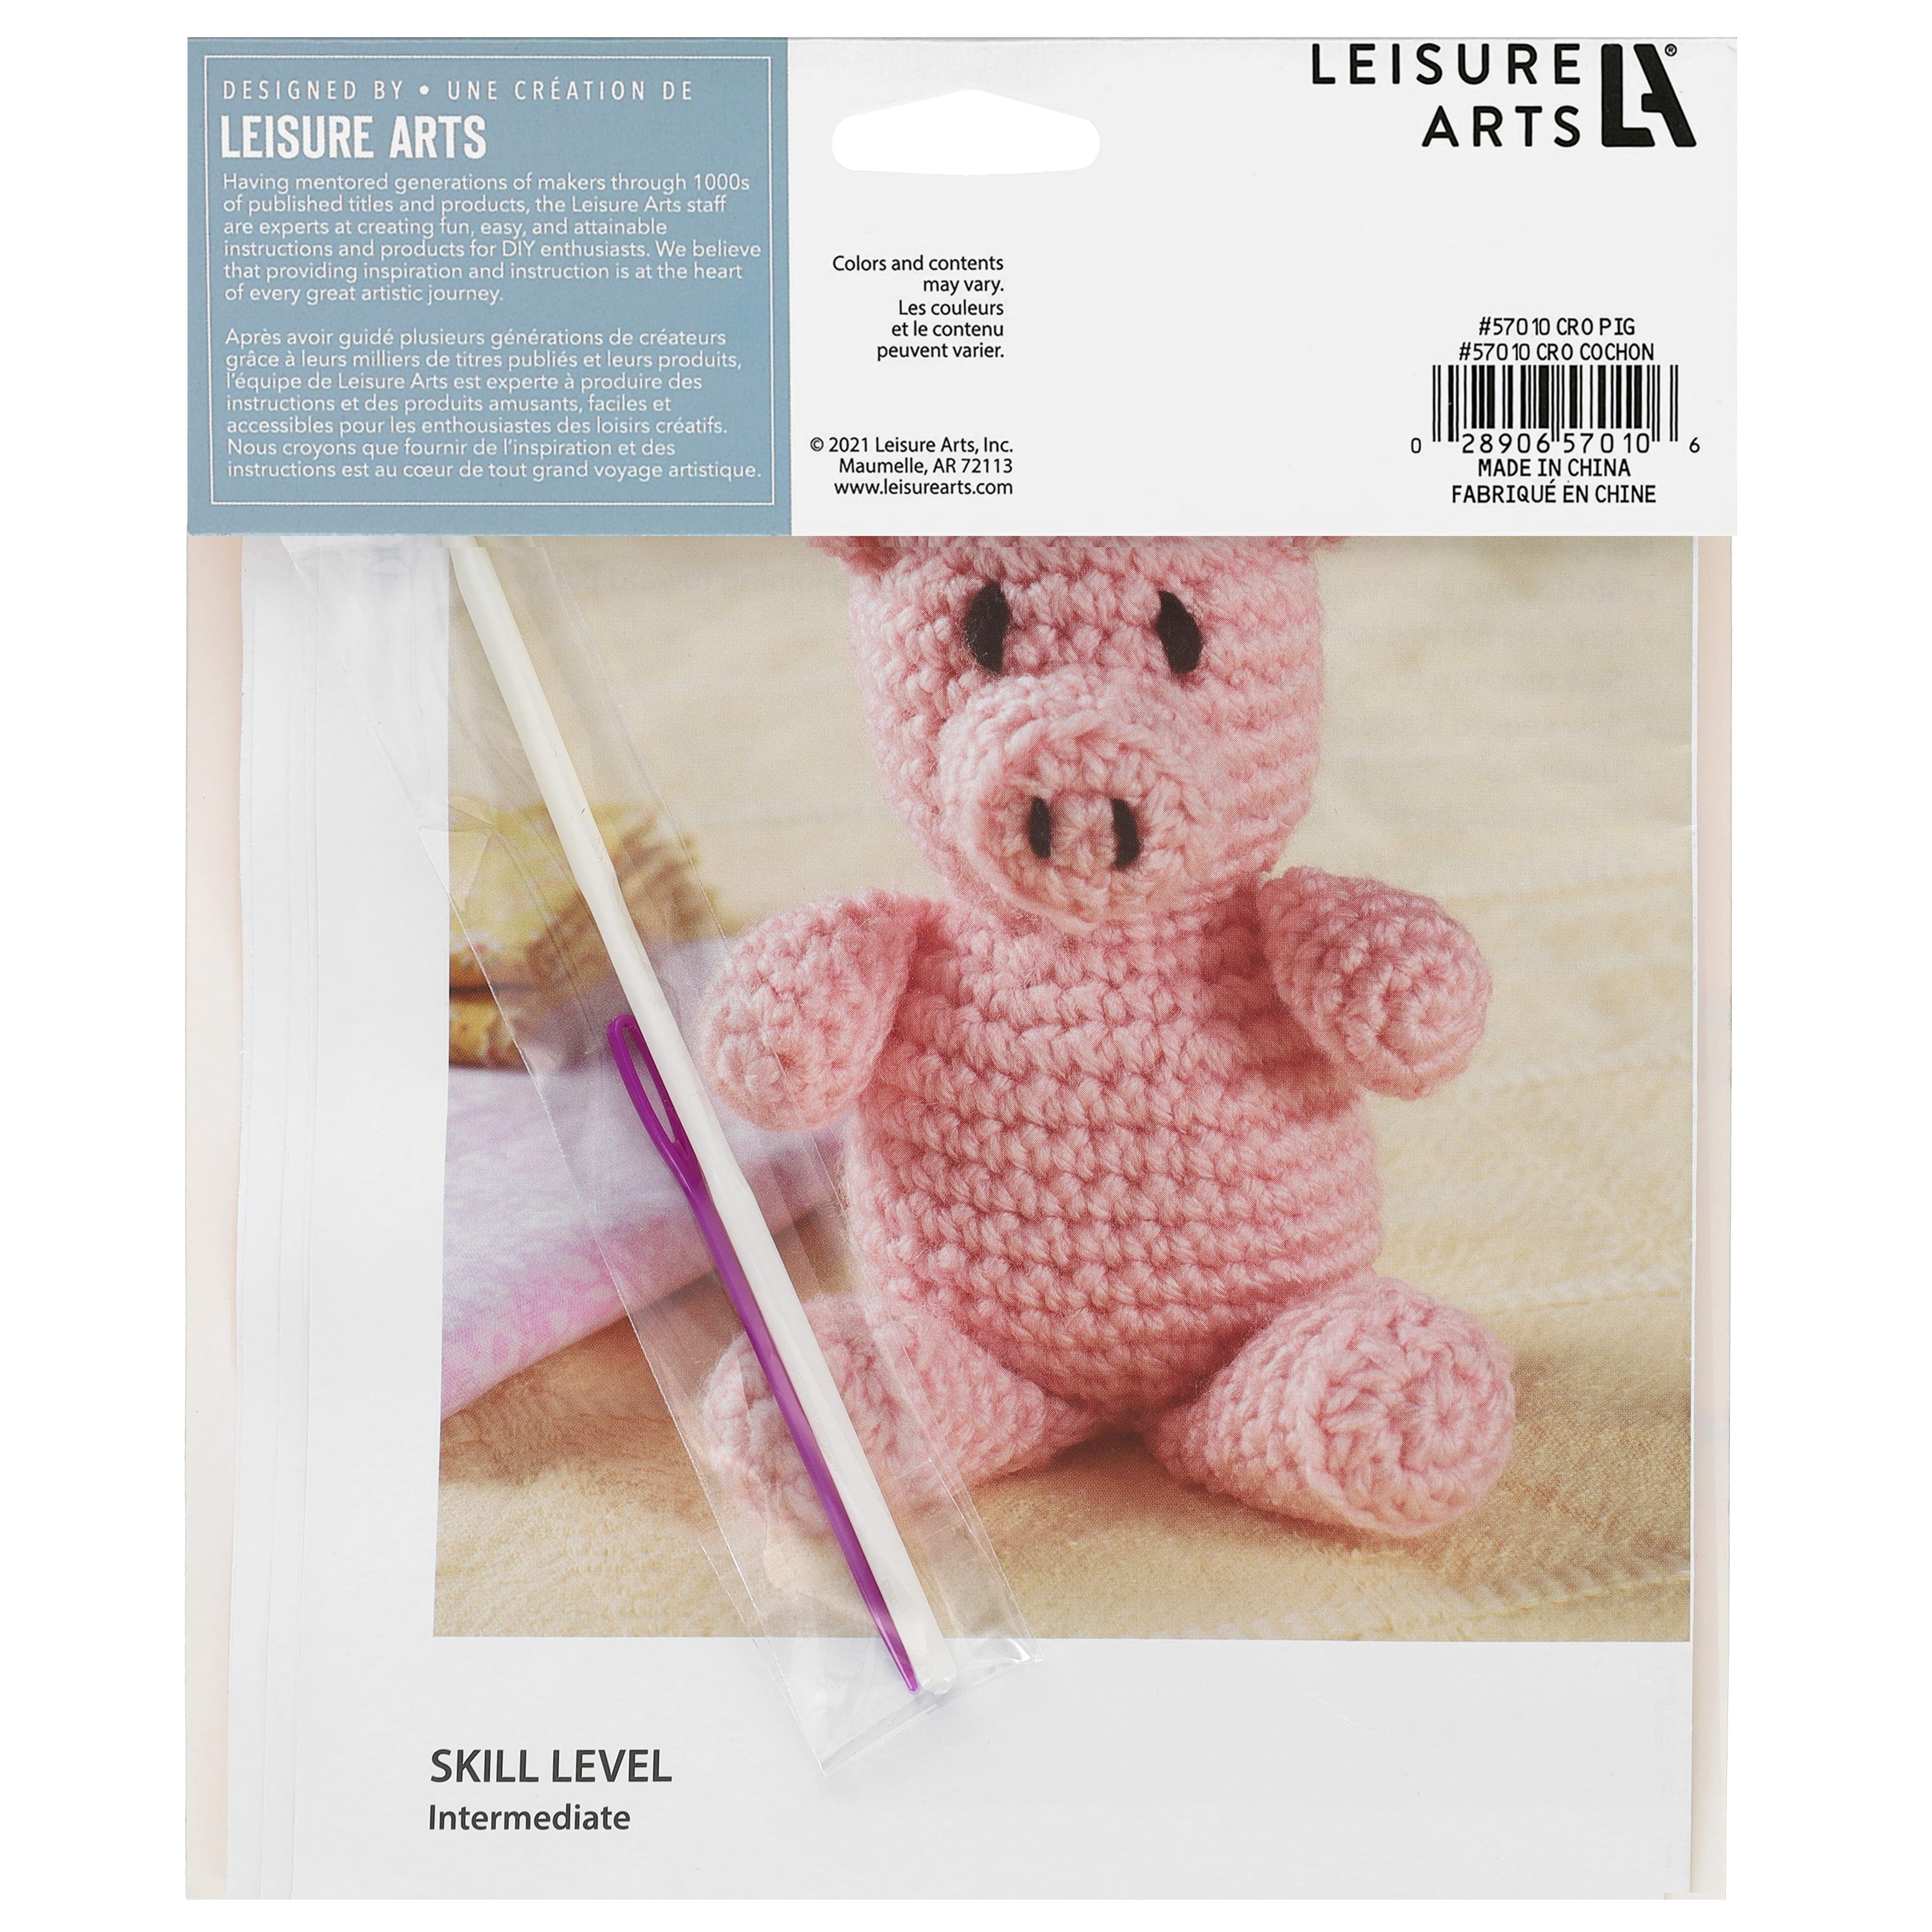 Leisure Arts&#xAE; Pig Crochet Friend Kit